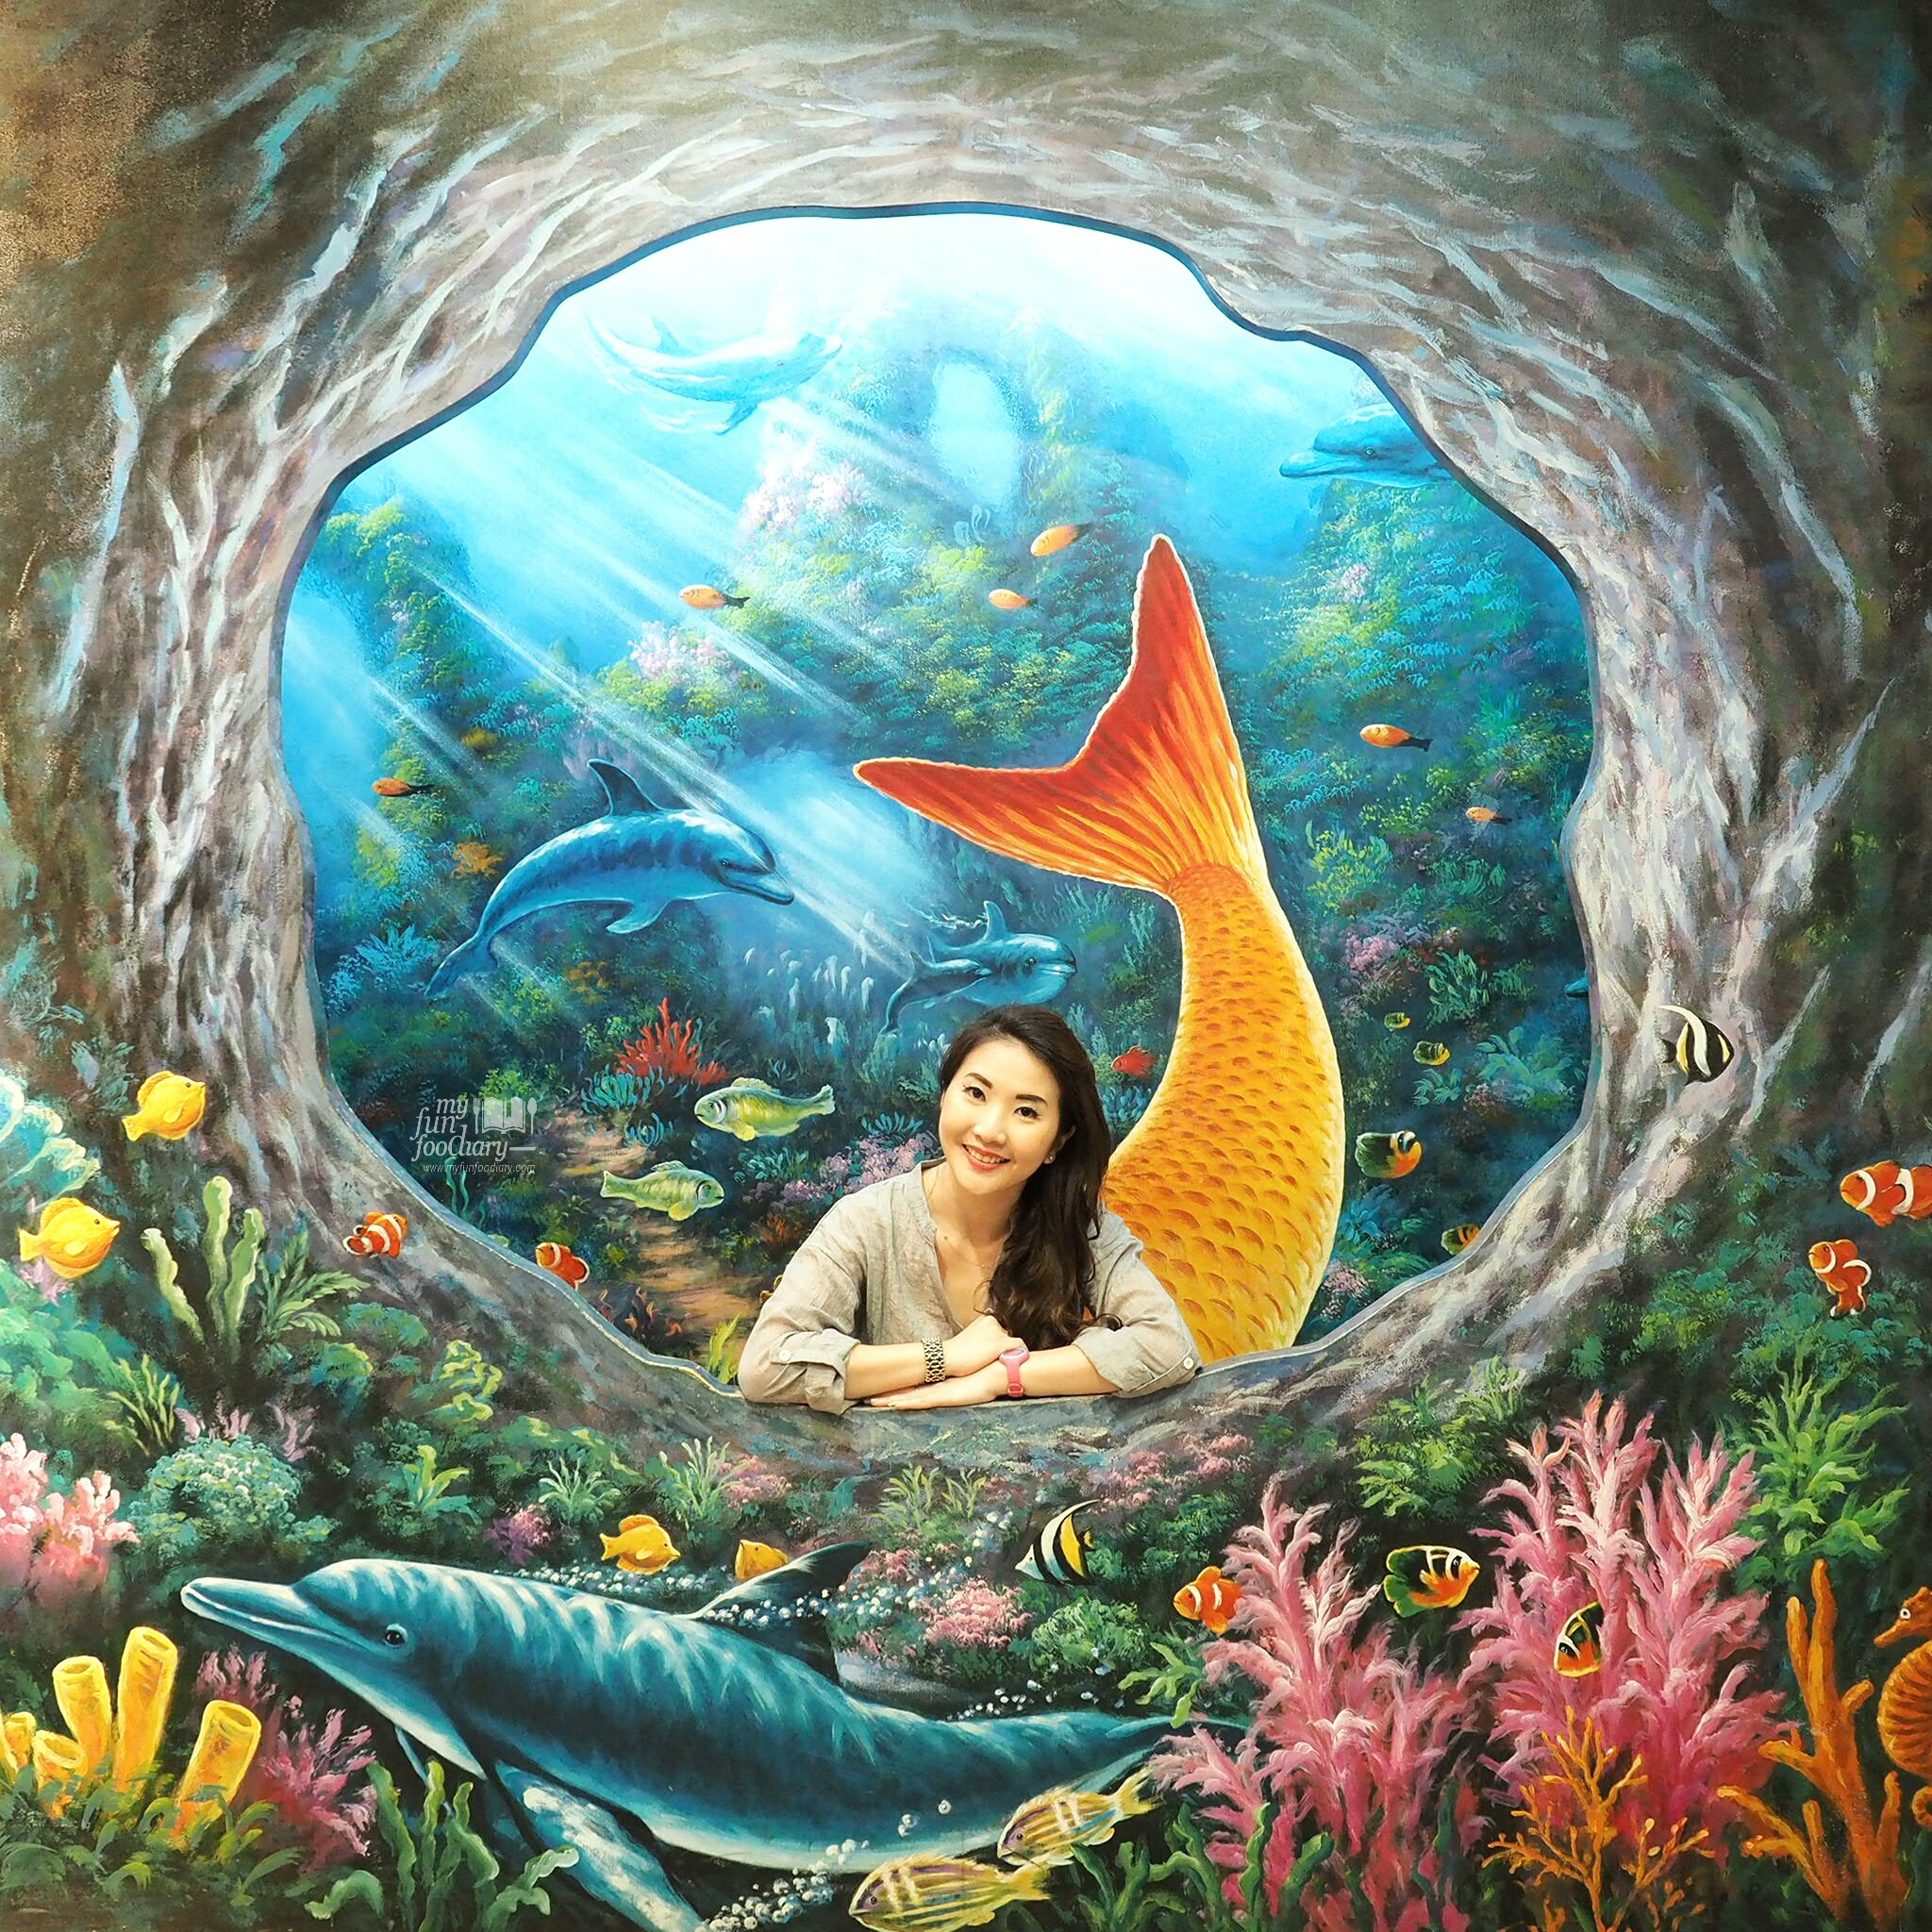 Mullie as Mermaid at Trick Eye Museum Singapore by Myfunfoodiary